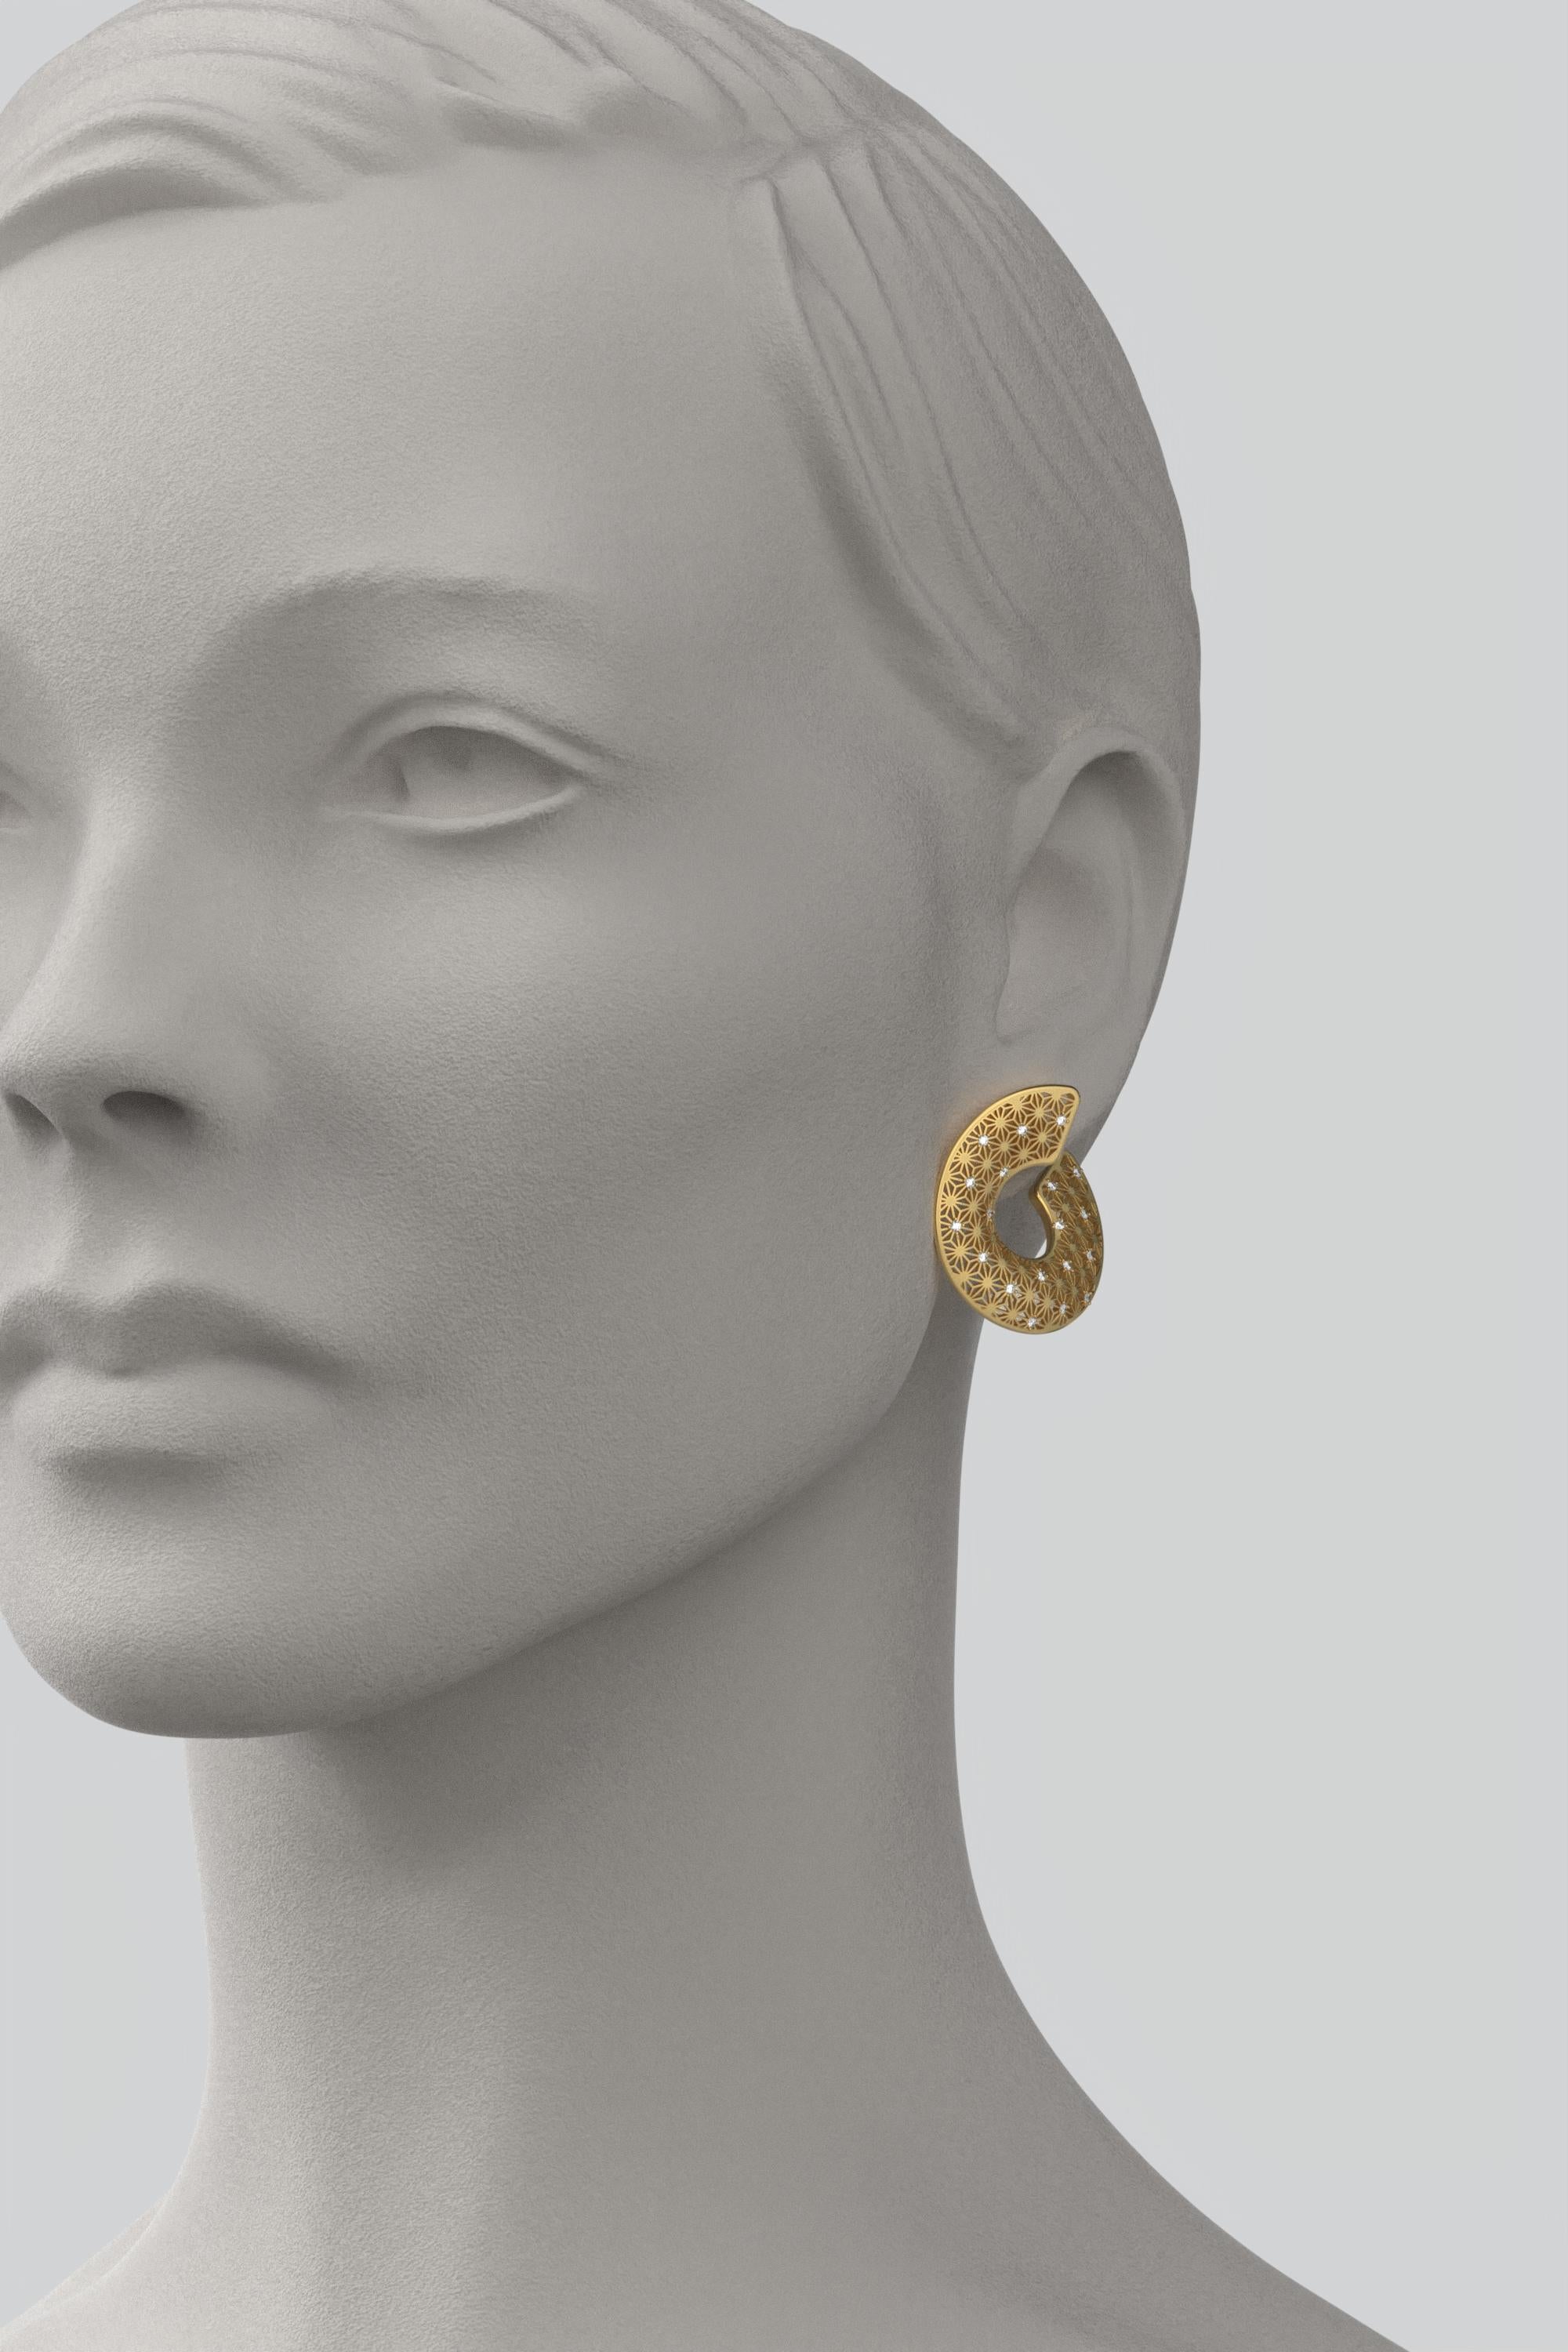 Modern Statement Italian Diamond Earrings in 14k Genuine Gold by Oltremare Gioielli For Sale